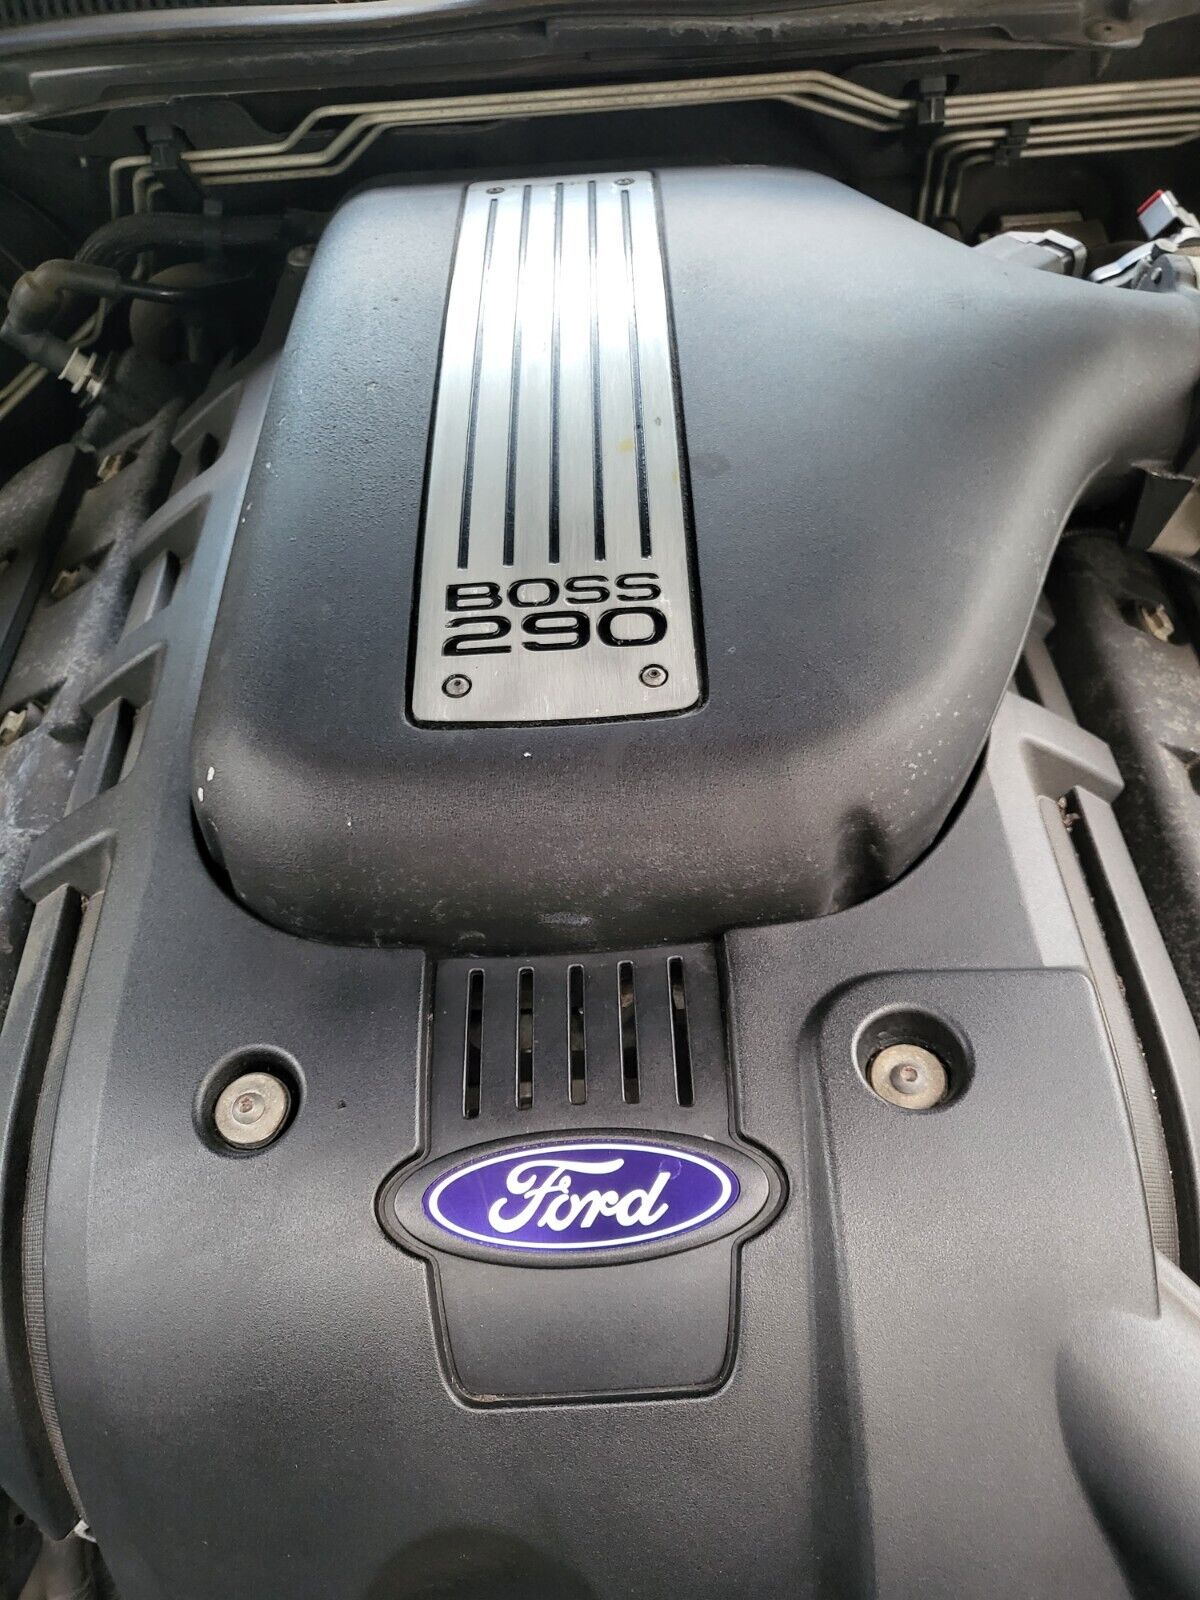 2008 Ford Falcon FG 290BOSS XR8 6 speed auto